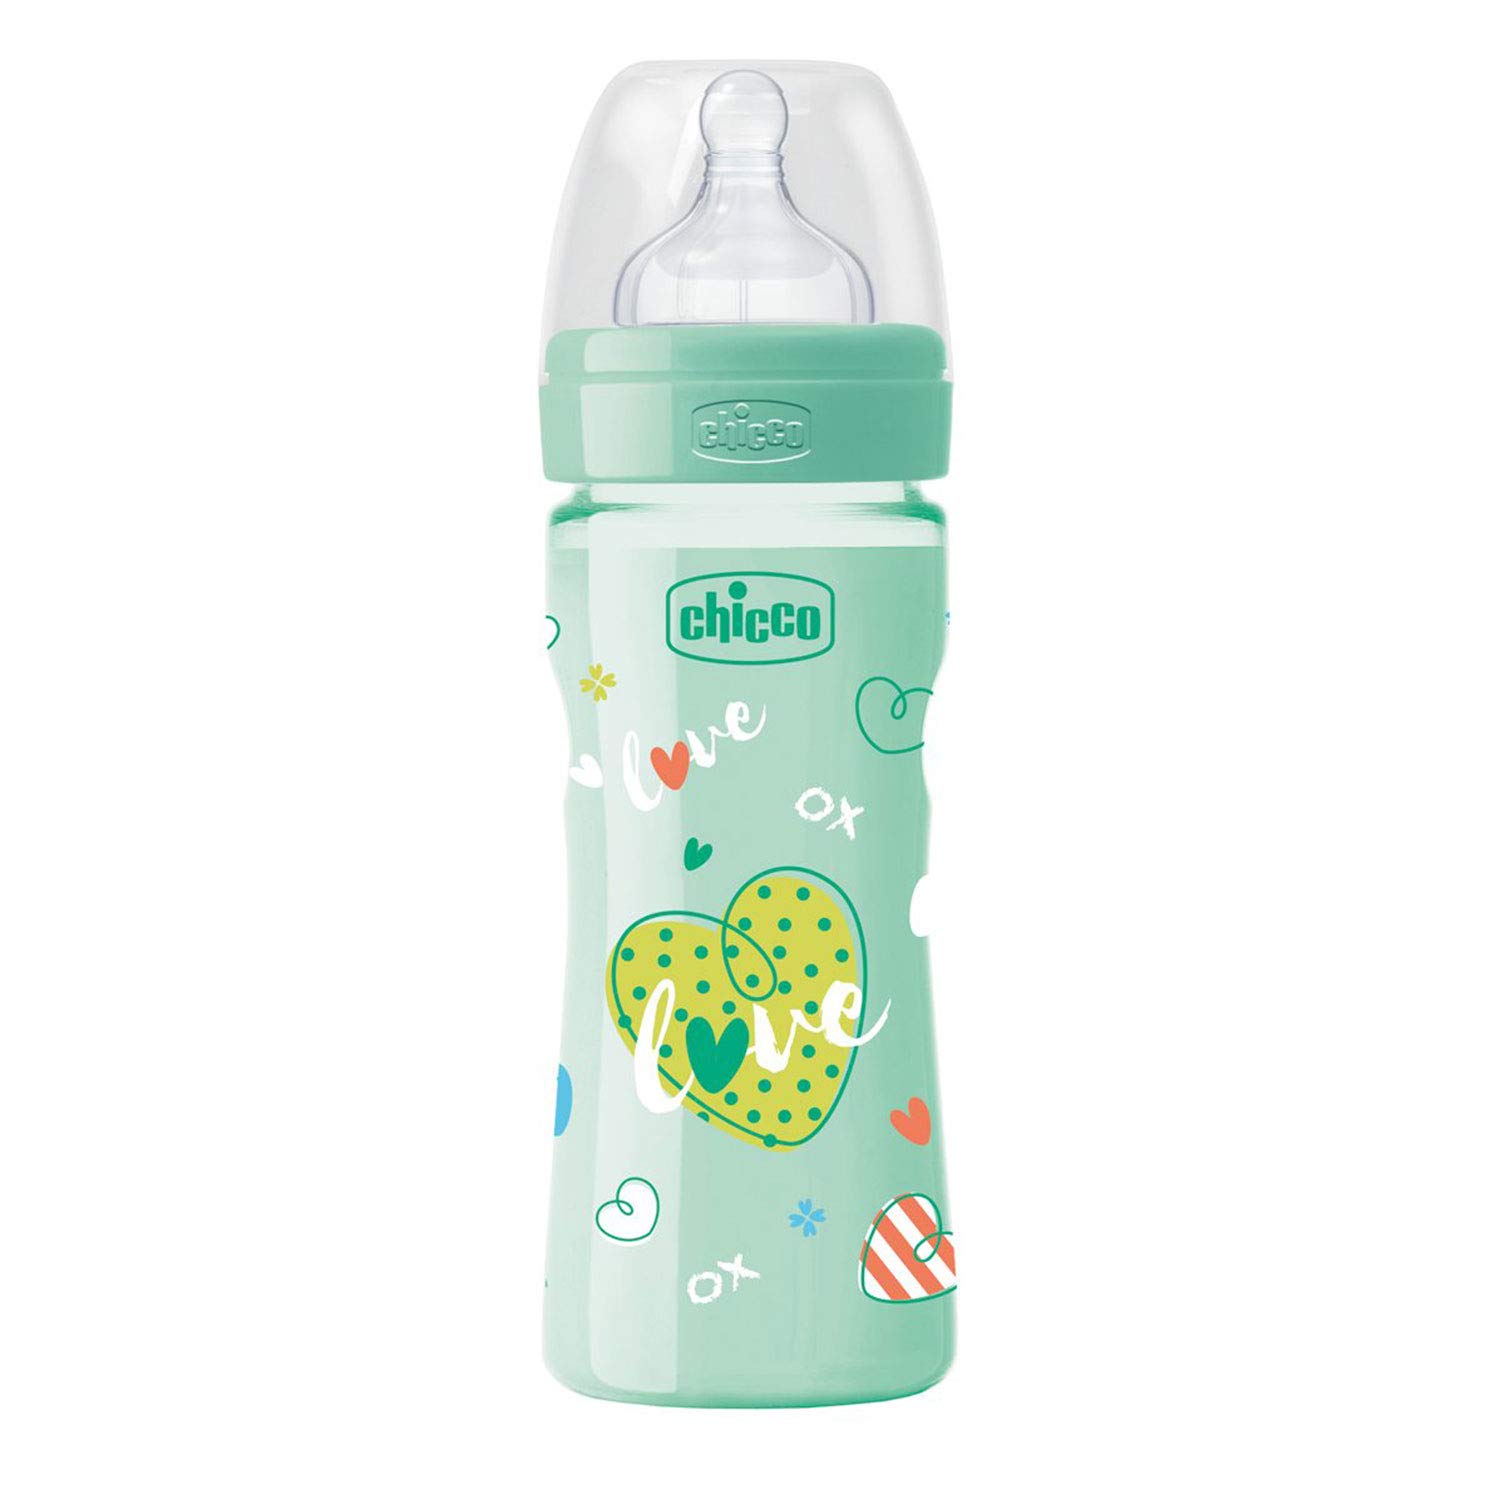 Chicco 250 ml WellBeing Feeding Bottle, Love Edition, Advanced Anti-Colic System, Soft & Hygienic Silicone Teat, BPA Free (Green)